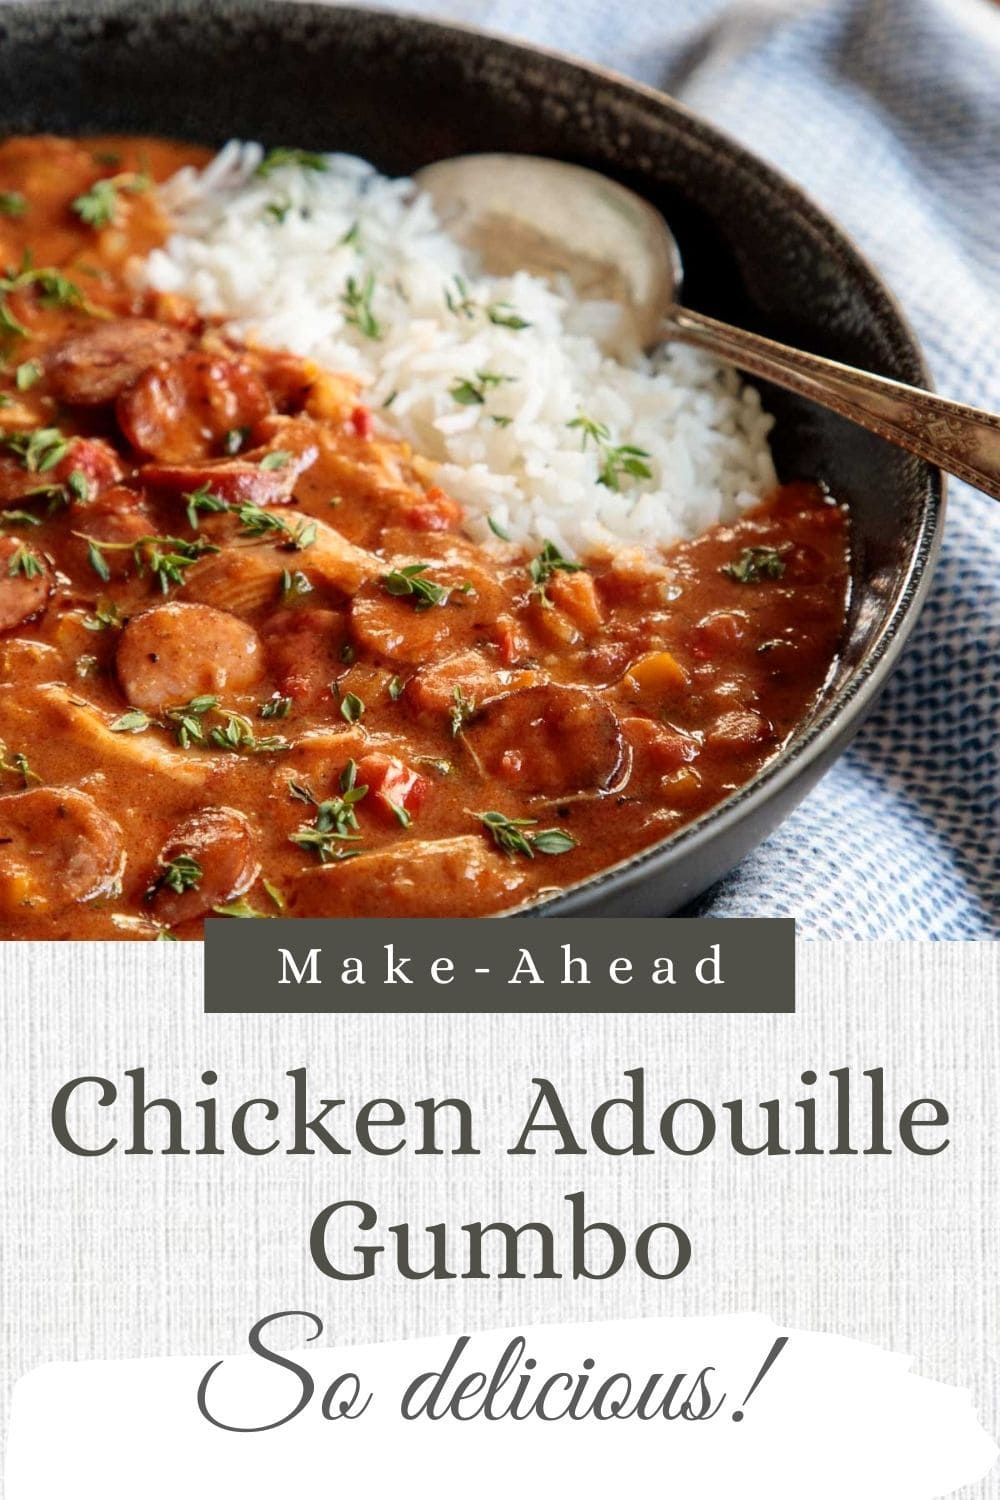 Make-Ahead Chicken Andouille Gumbo